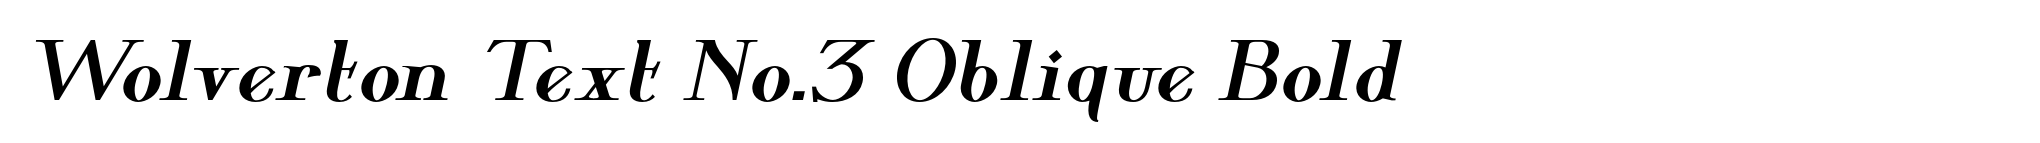 Wolverton Text No.3 Oblique Bold image